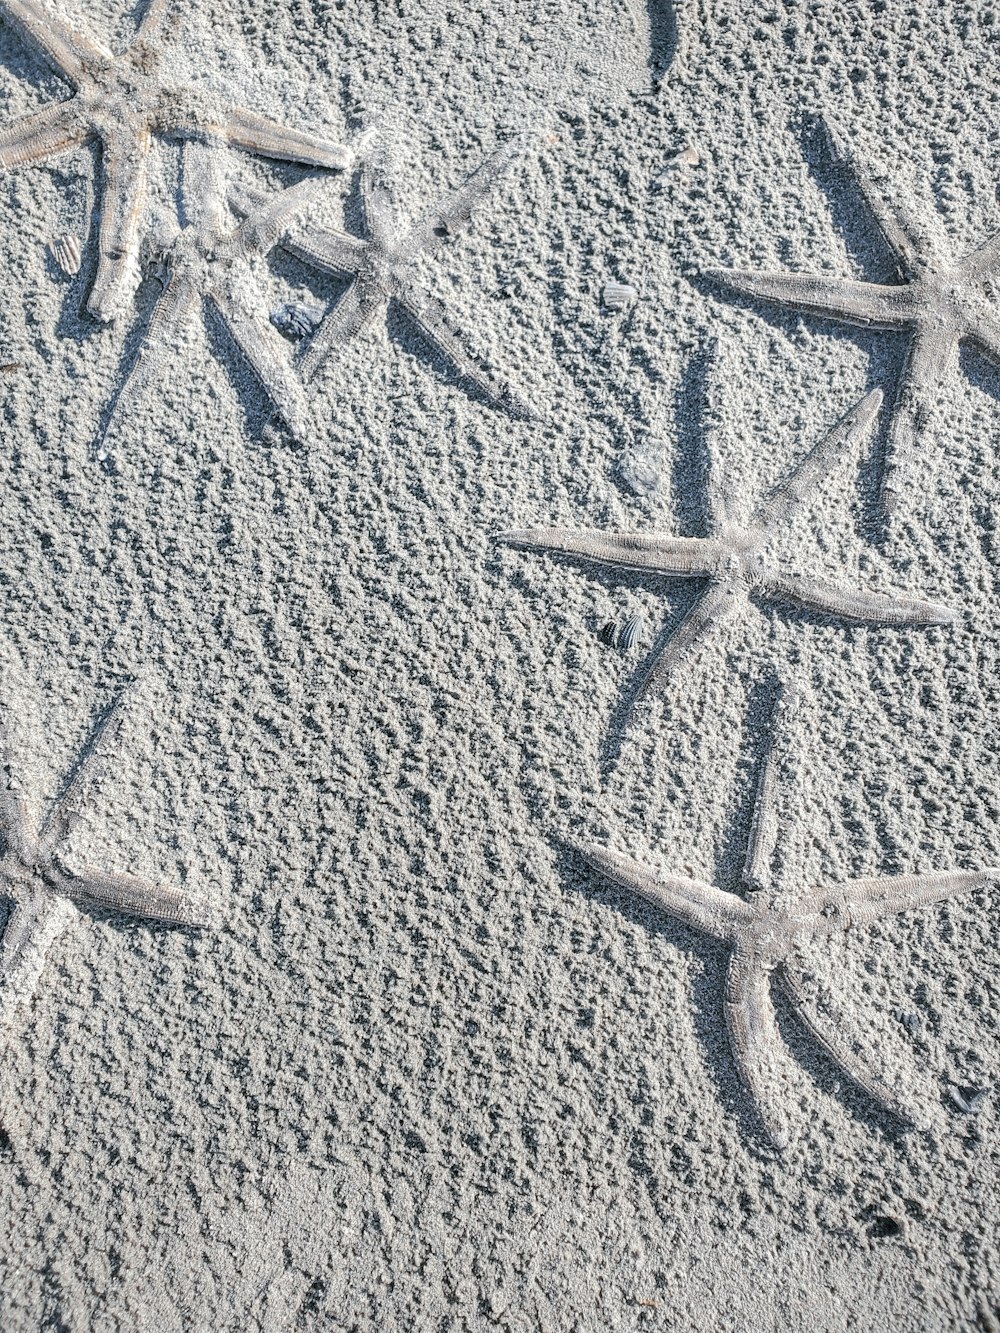 white snow on brown sand